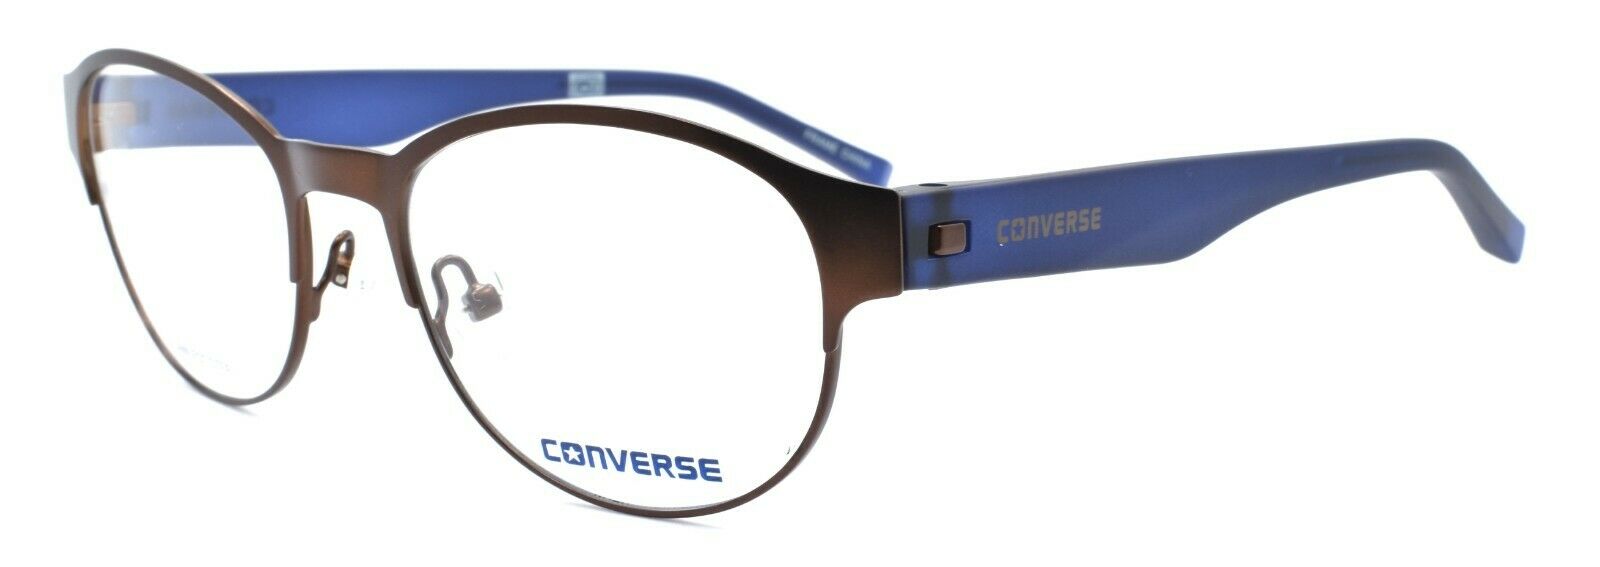 1-CONVERSE Q030 UF Women's Eyeglasses Frames 49-17-135 Brown / Blue + CASE-751286272963-IKSpecs